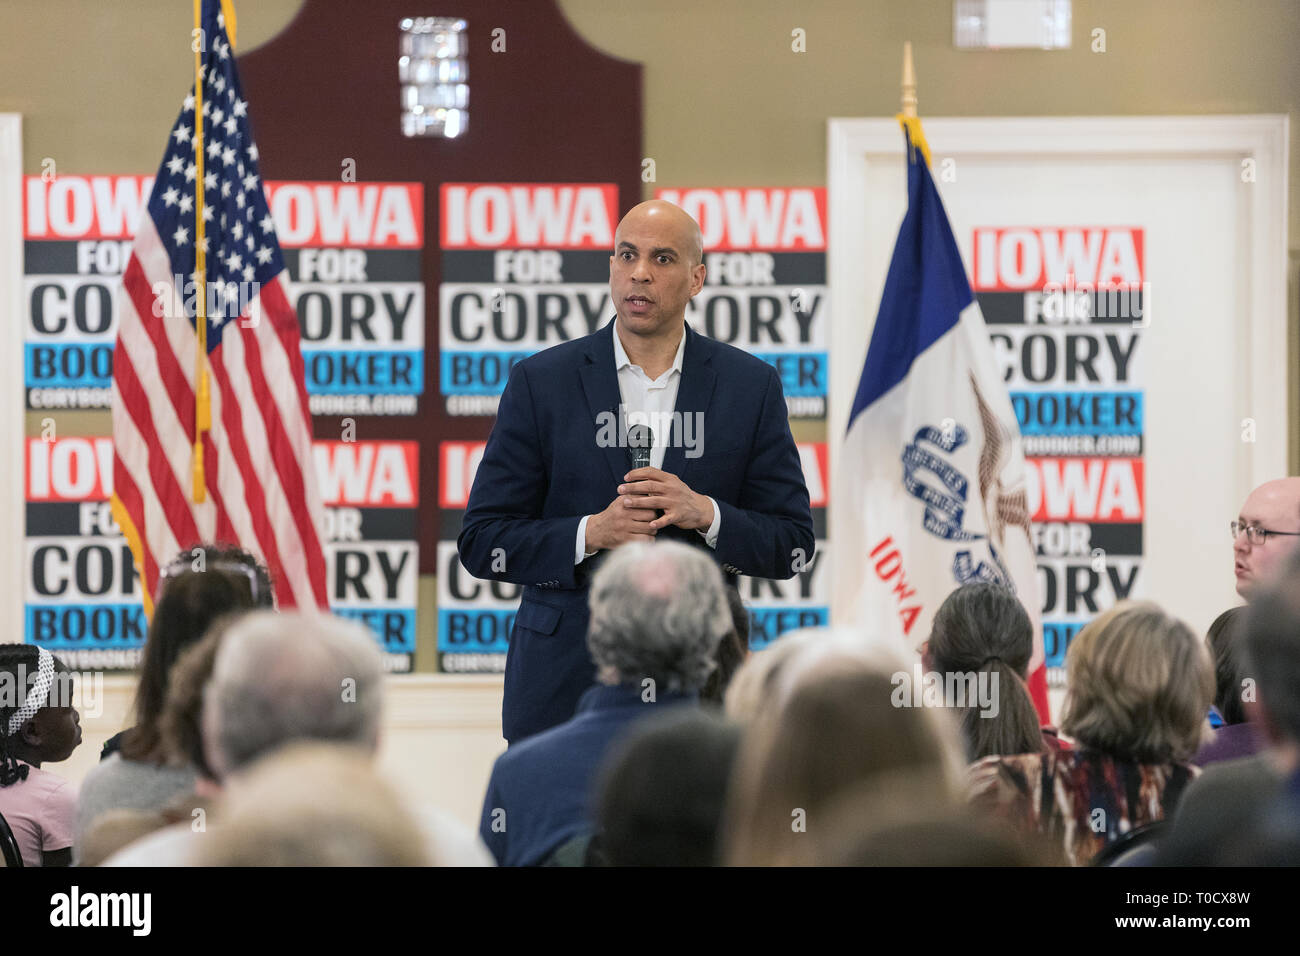 Ottumwa, Iowa, USA. 16th March, 2019. New Jersey senator Cory Booker held a presidential campaign rally on Saturday at the Hotel Ottumwa in Ottumwa, I Stock Photo